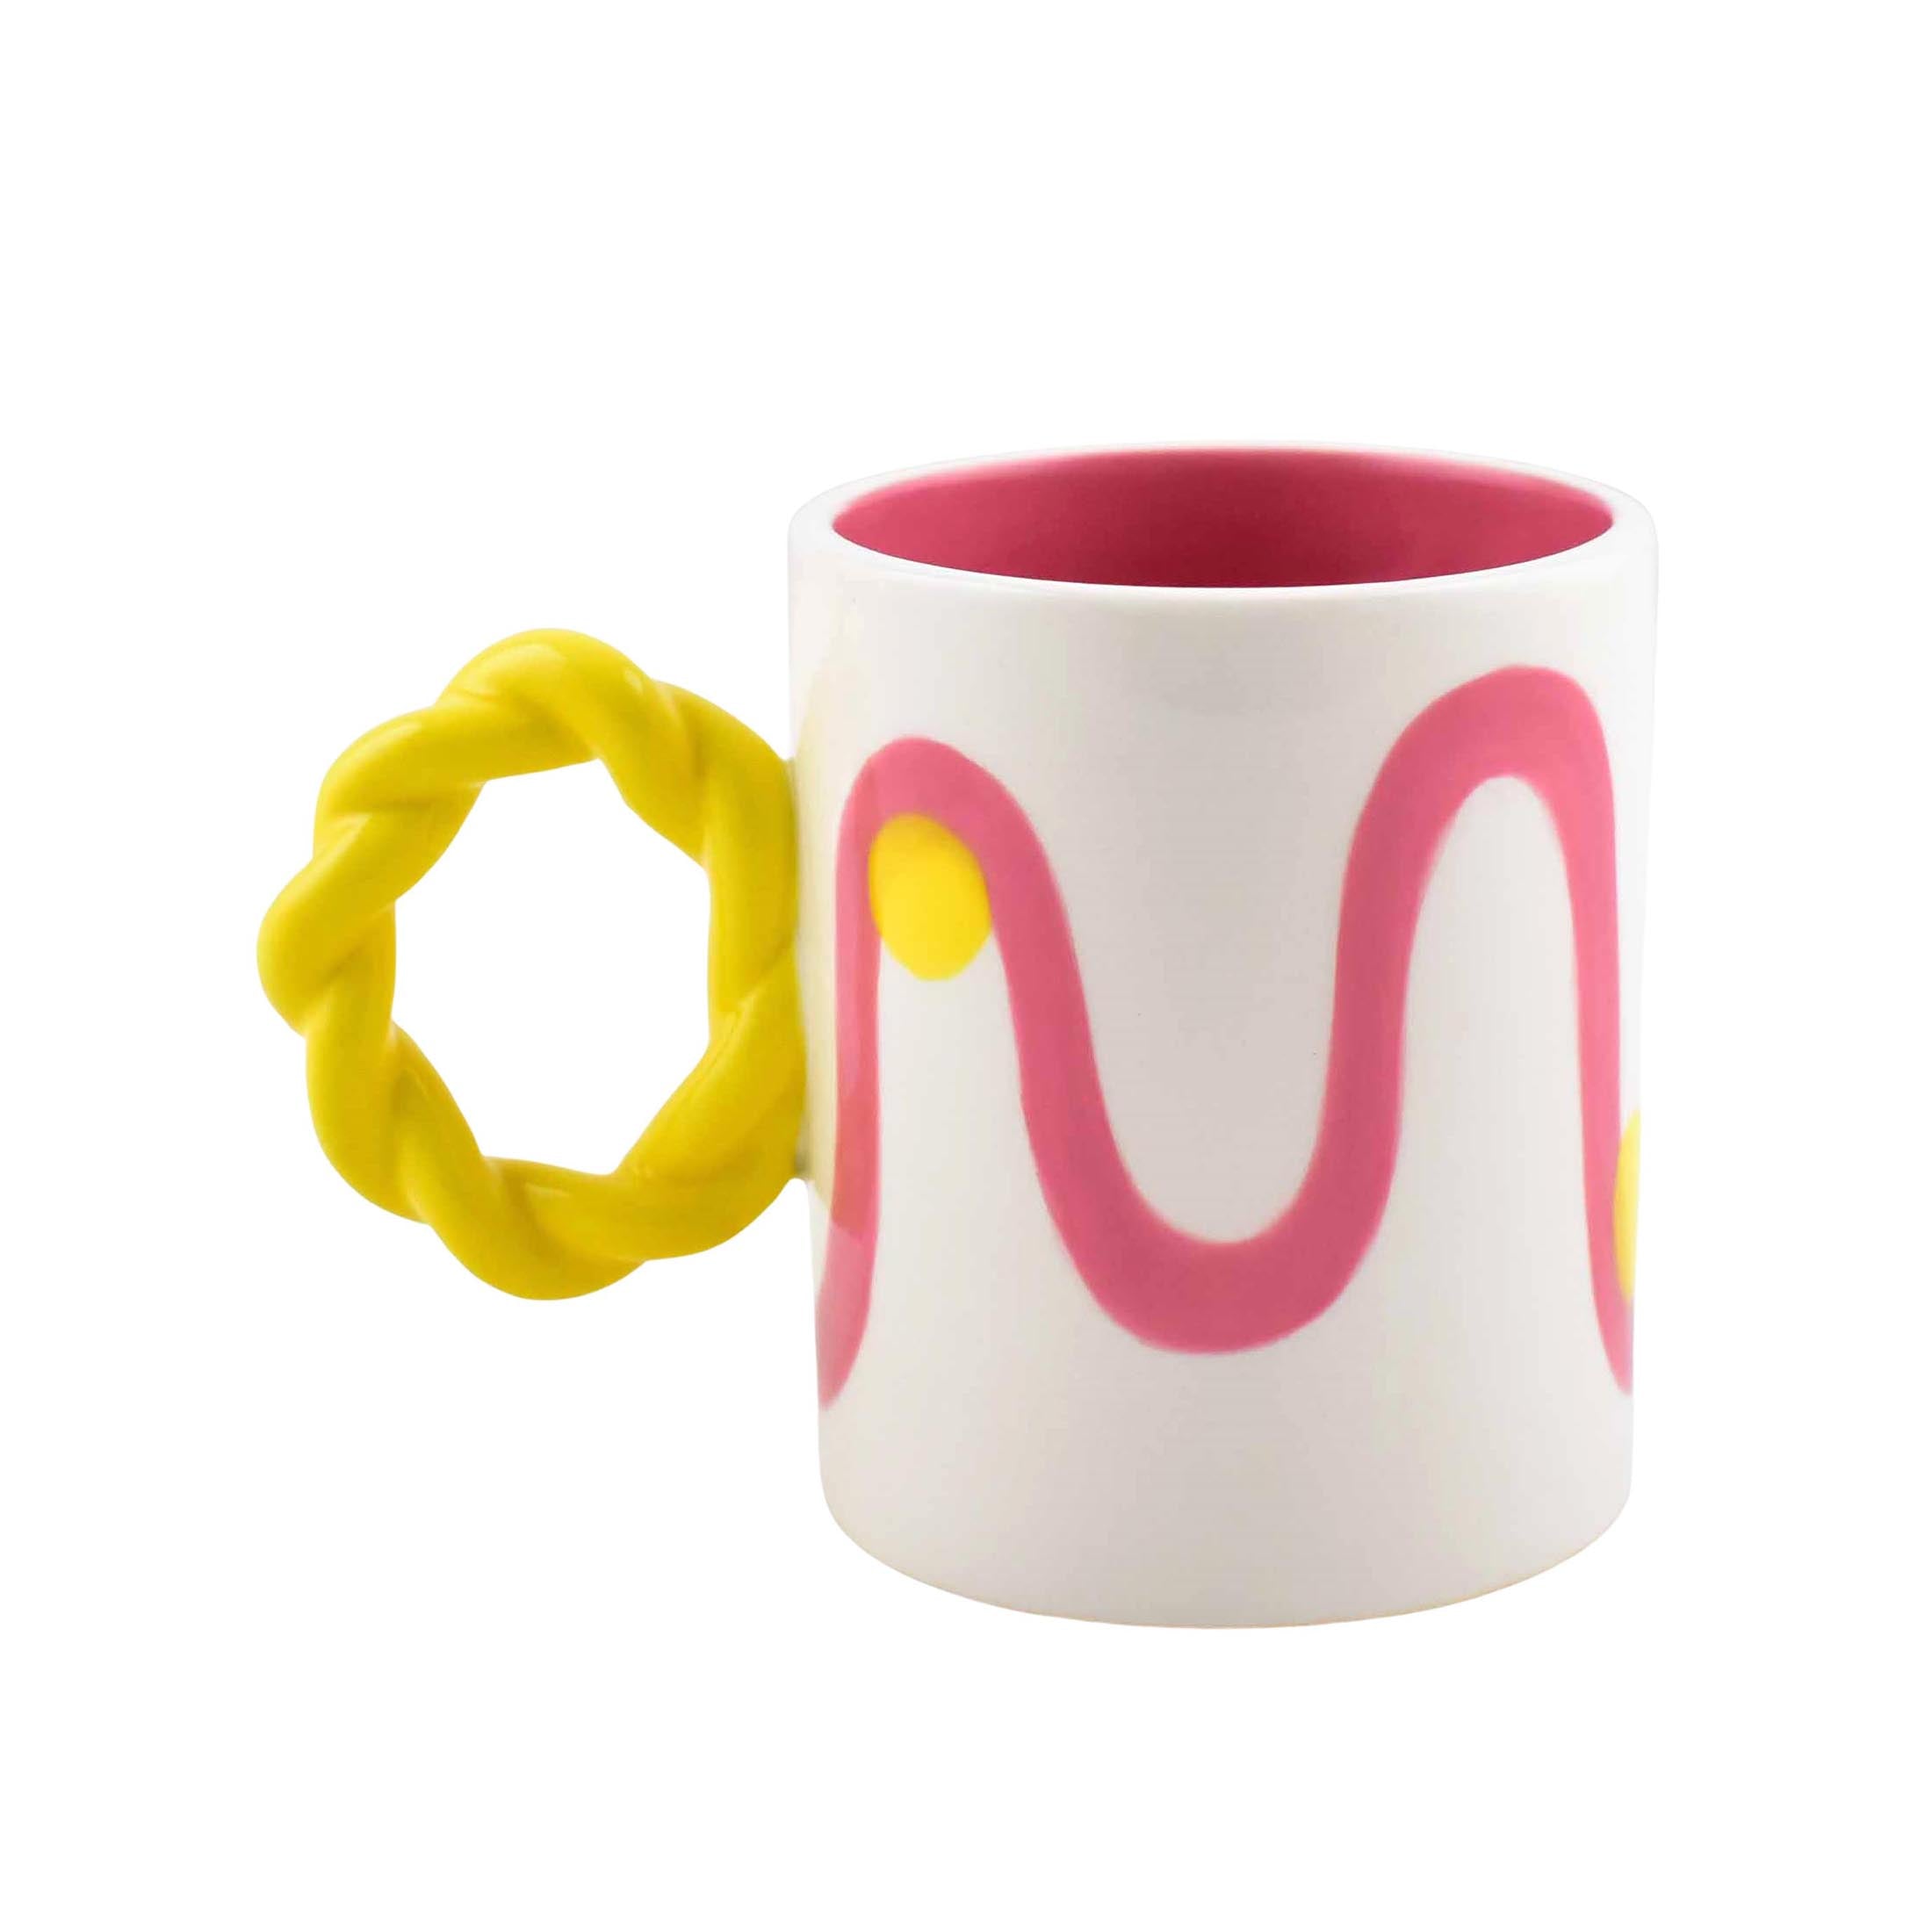 Herring & Bones - Concept Store Joyeux - Que Rico - Mugs - Mug "Miguel"